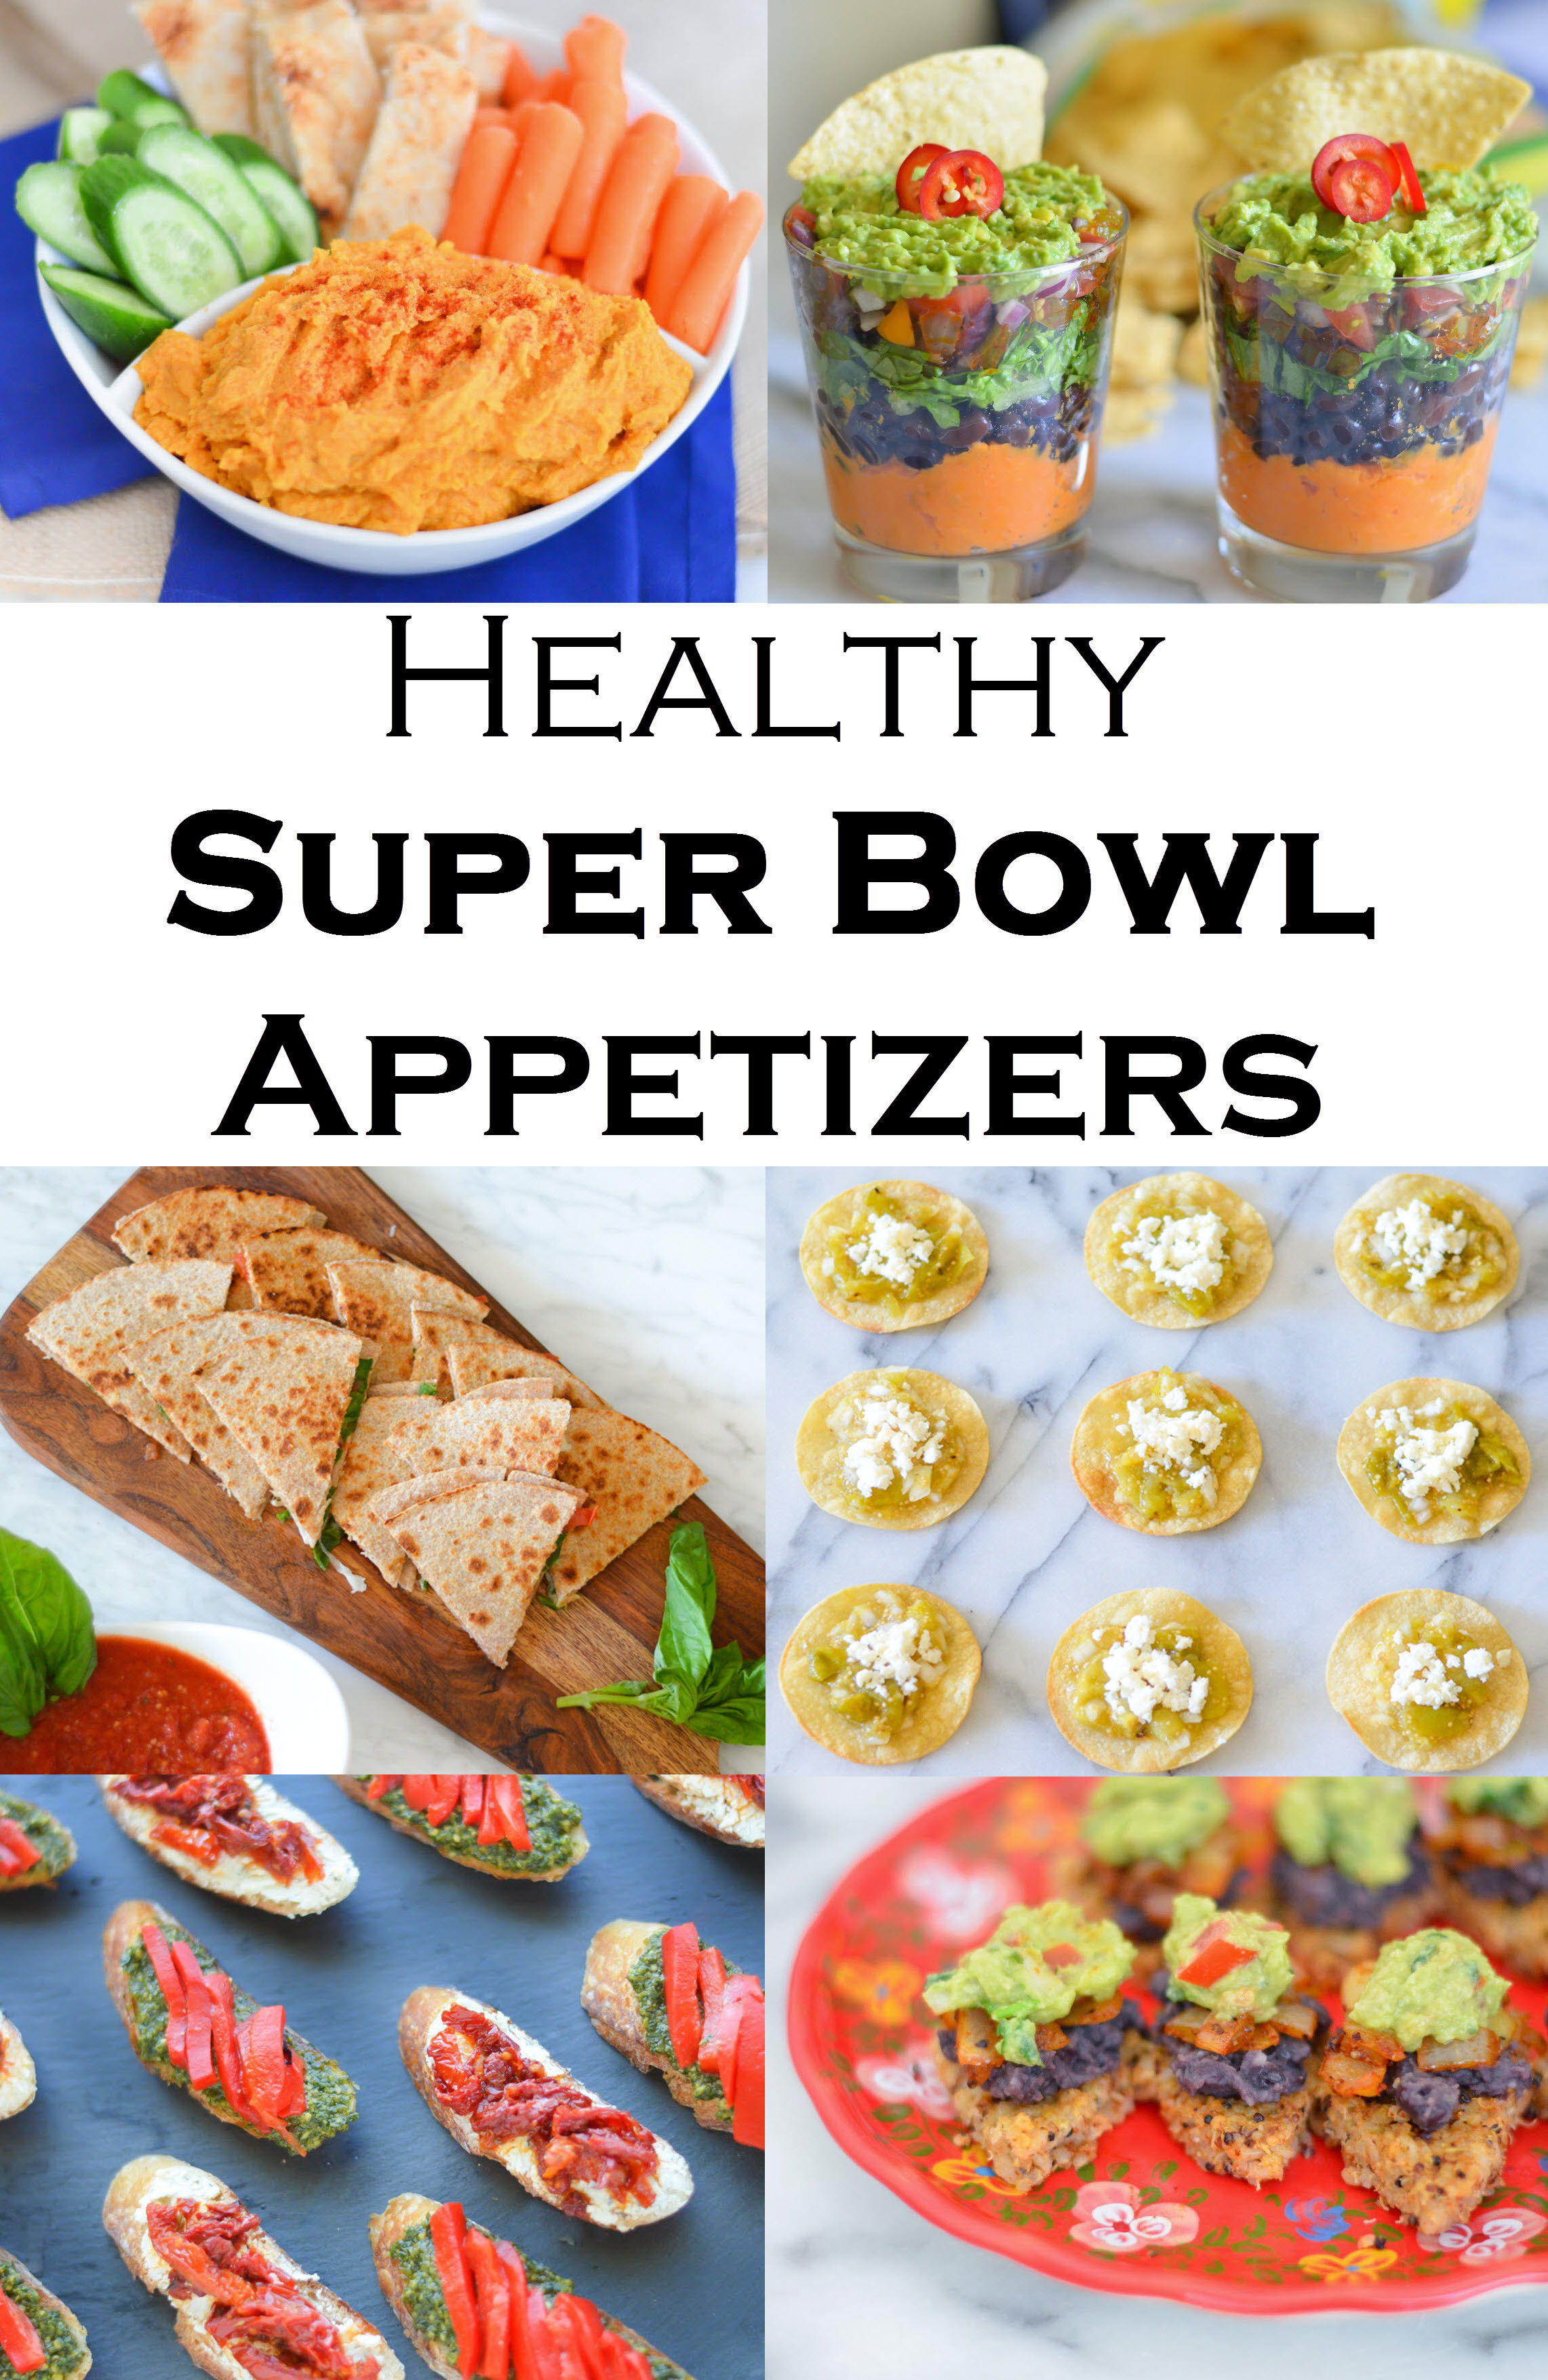 Healthy Super Bowl Appetizer Recipes
 Healthy Super Bowl Recipes For Everyone